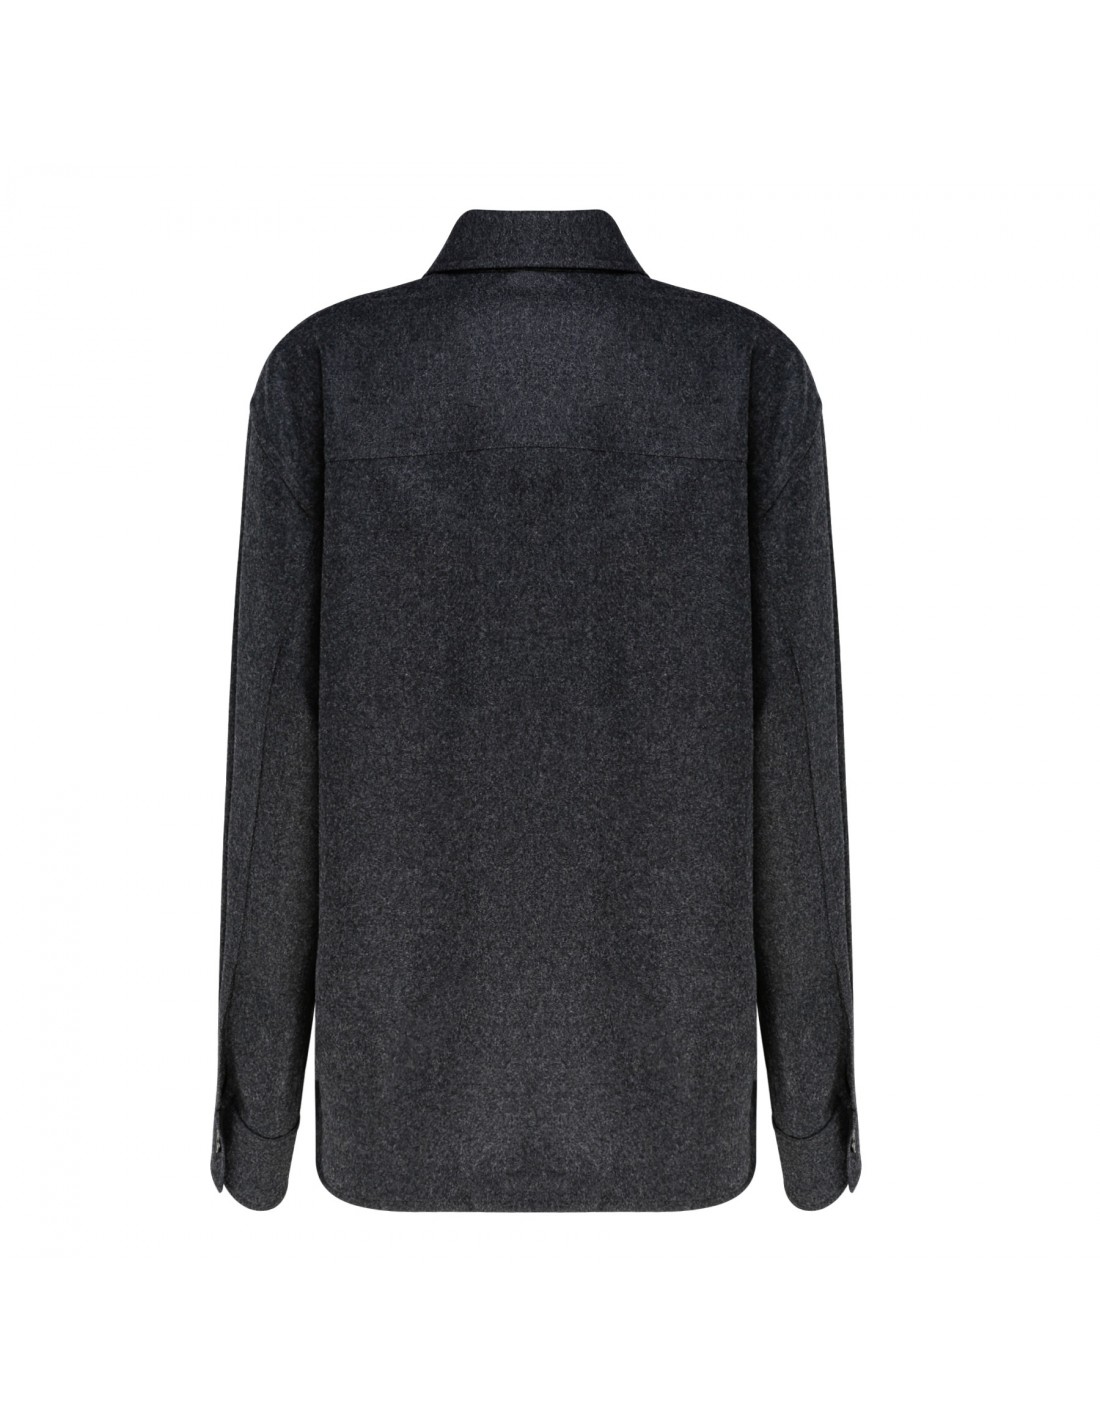 Gray knitted wool shirt